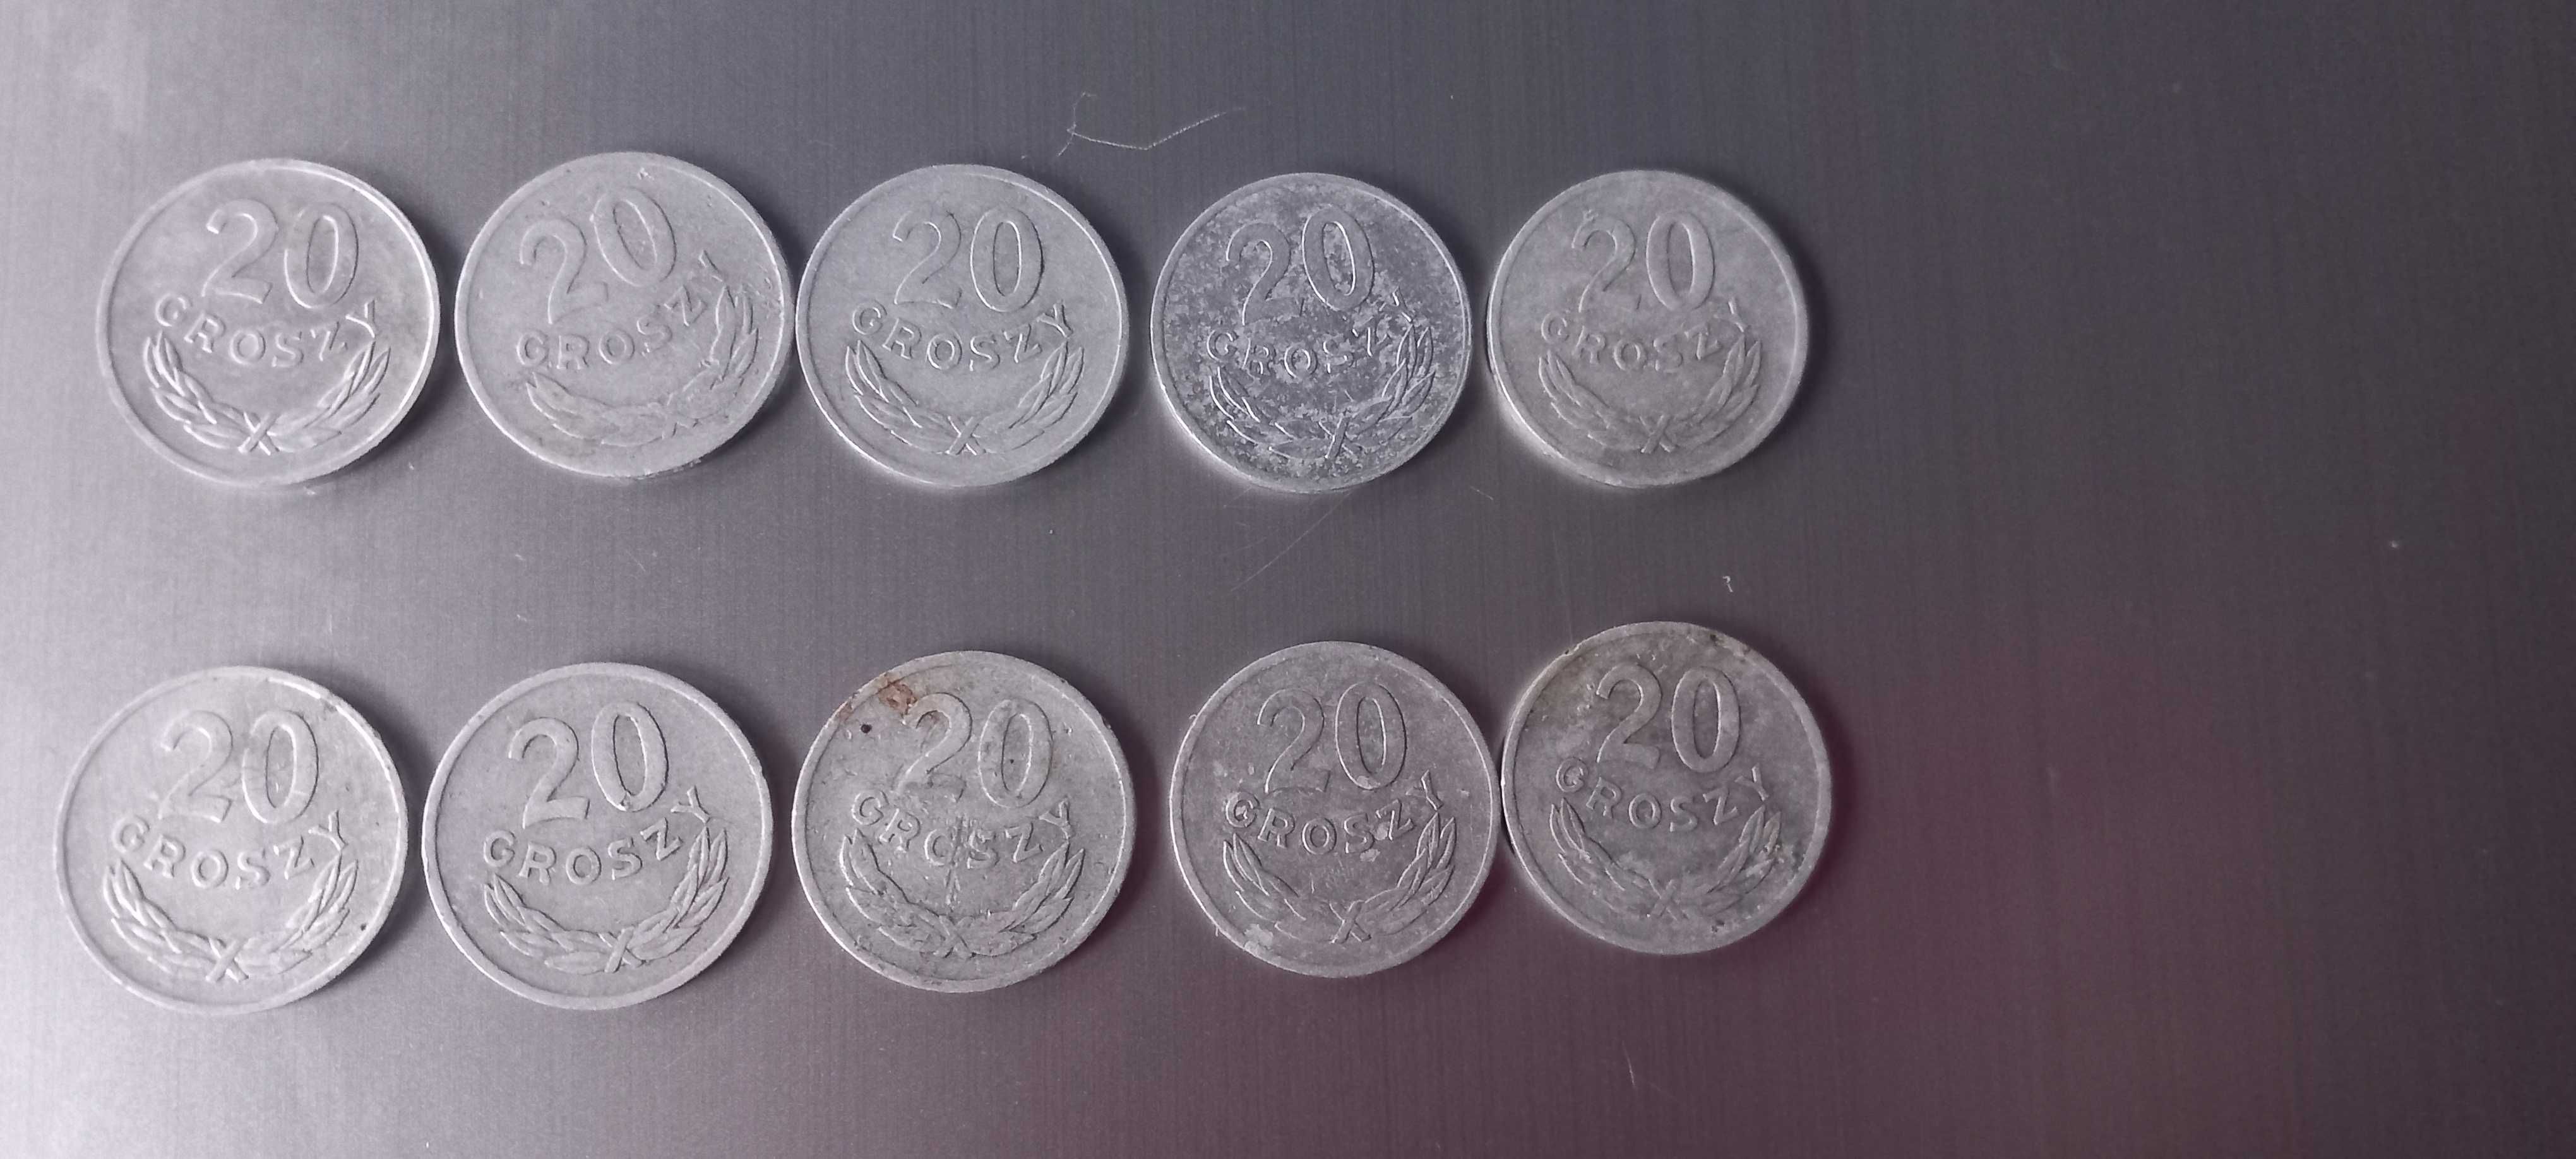 Moneta 20 gr Rzeczpospolita Ludowa 61,63,75,76,77,79,80,81